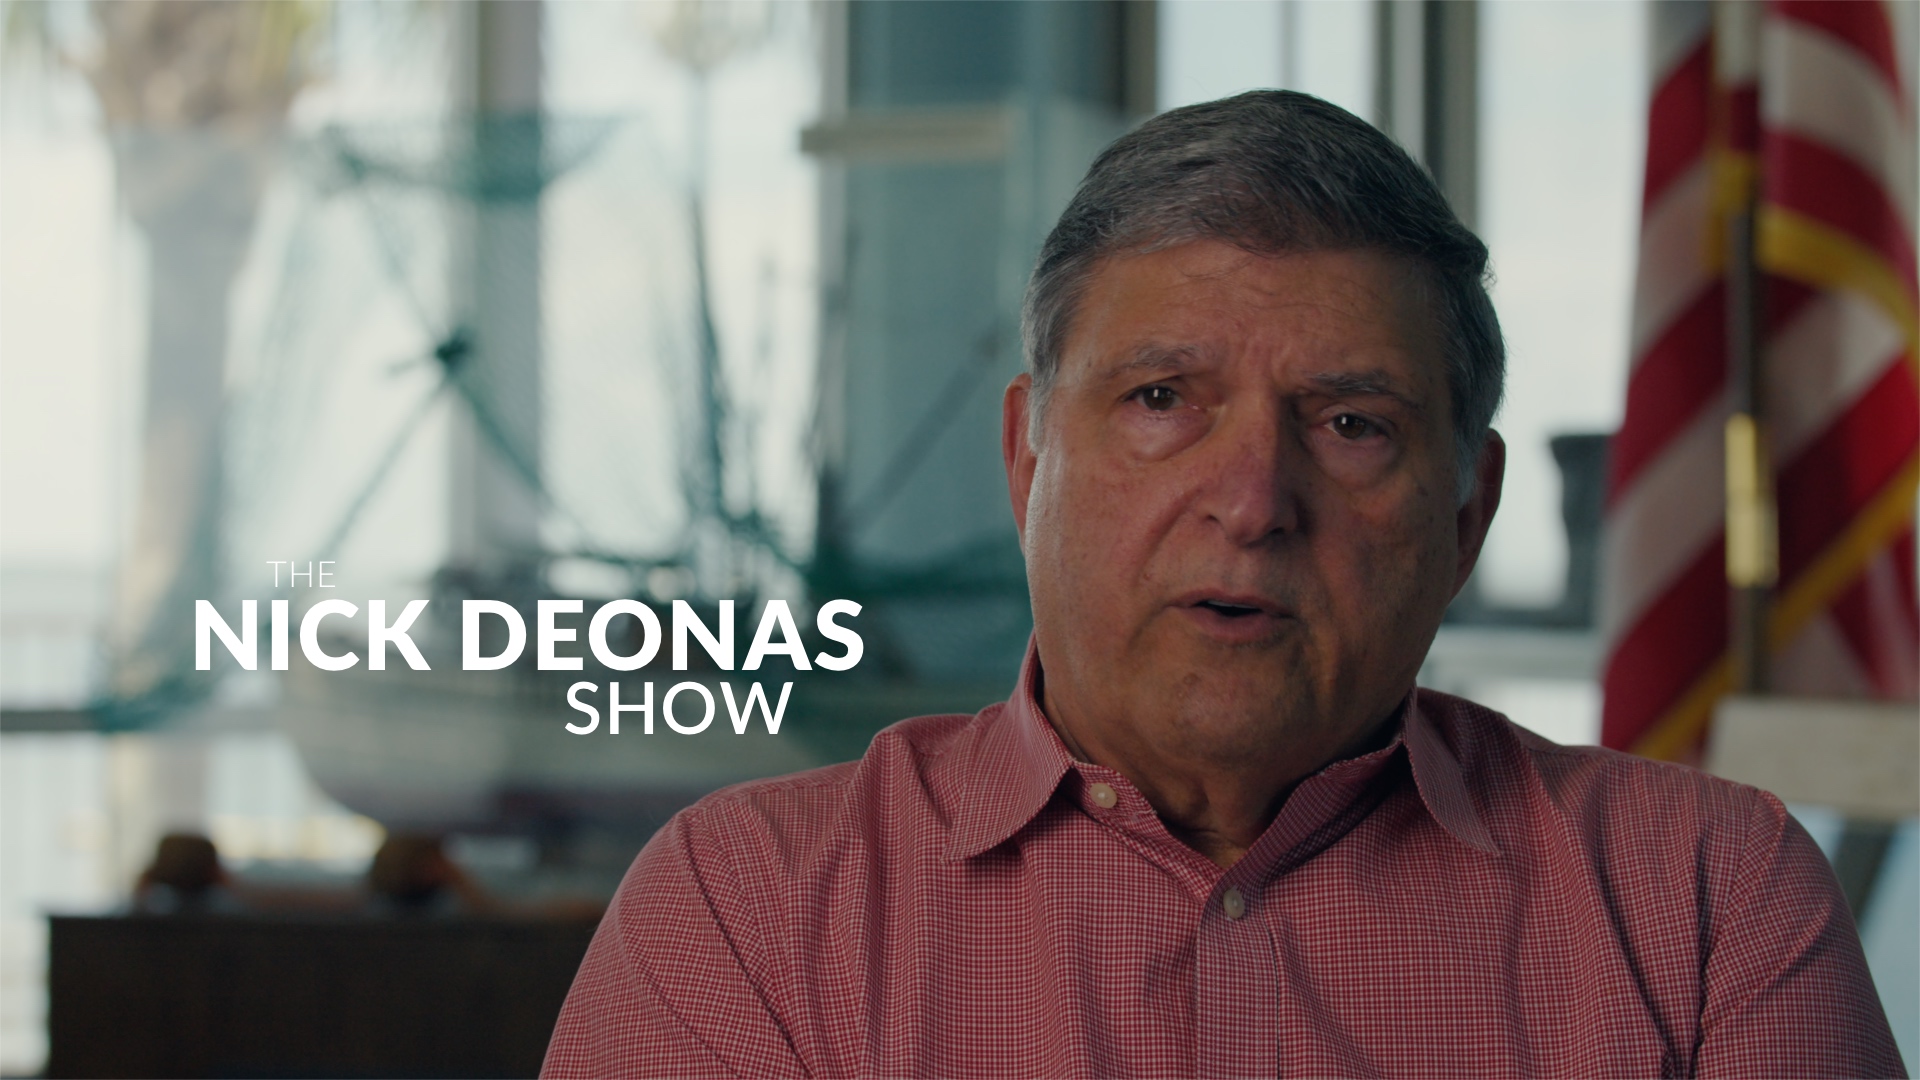 The Nick Deonas Show – Series Trailer